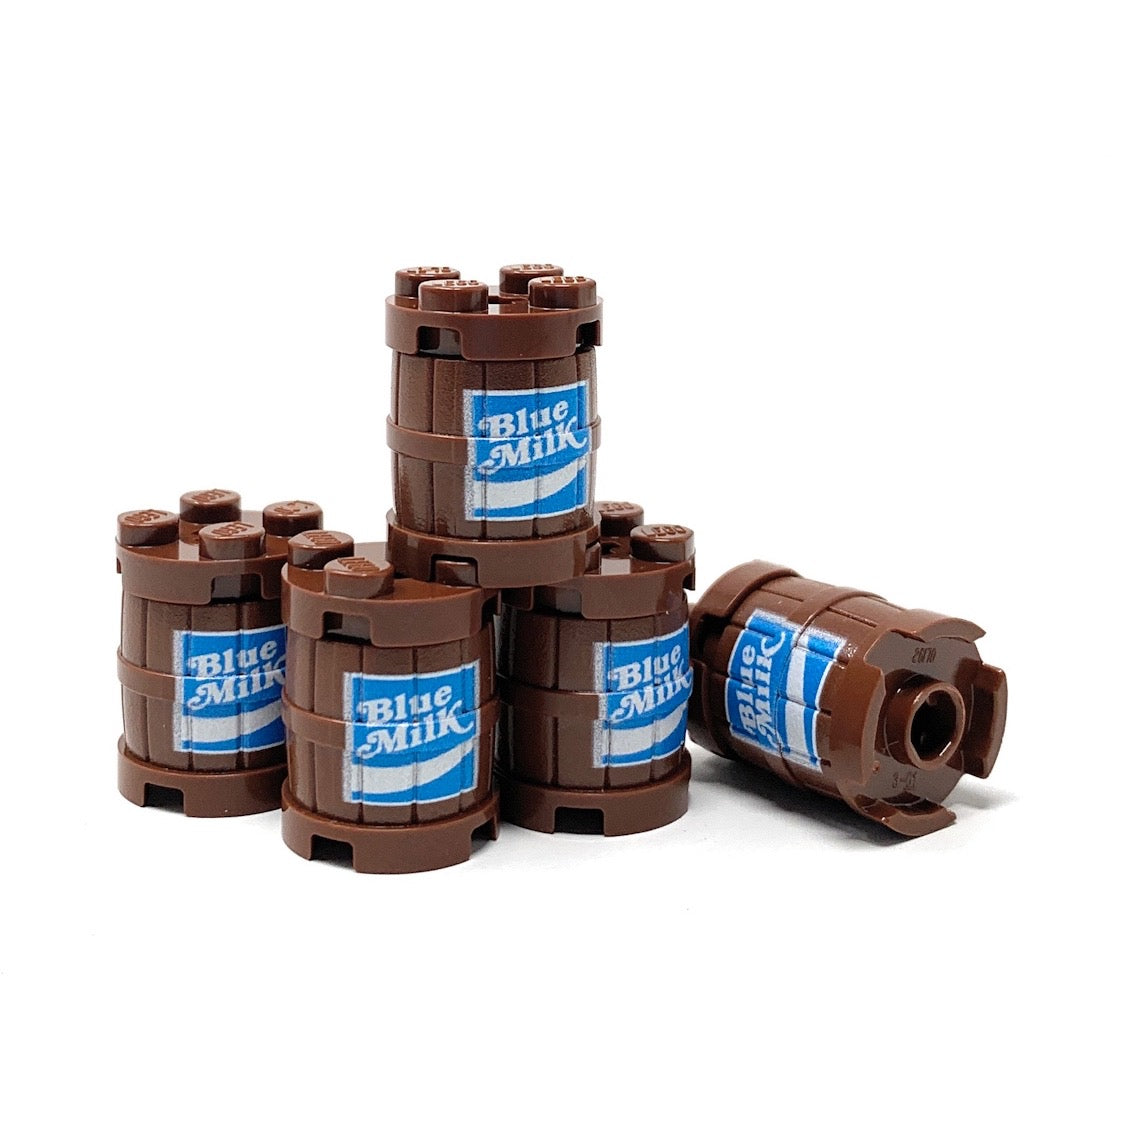 B3 Customs® Blue Milk Barrel / Keg made from LEGO parts